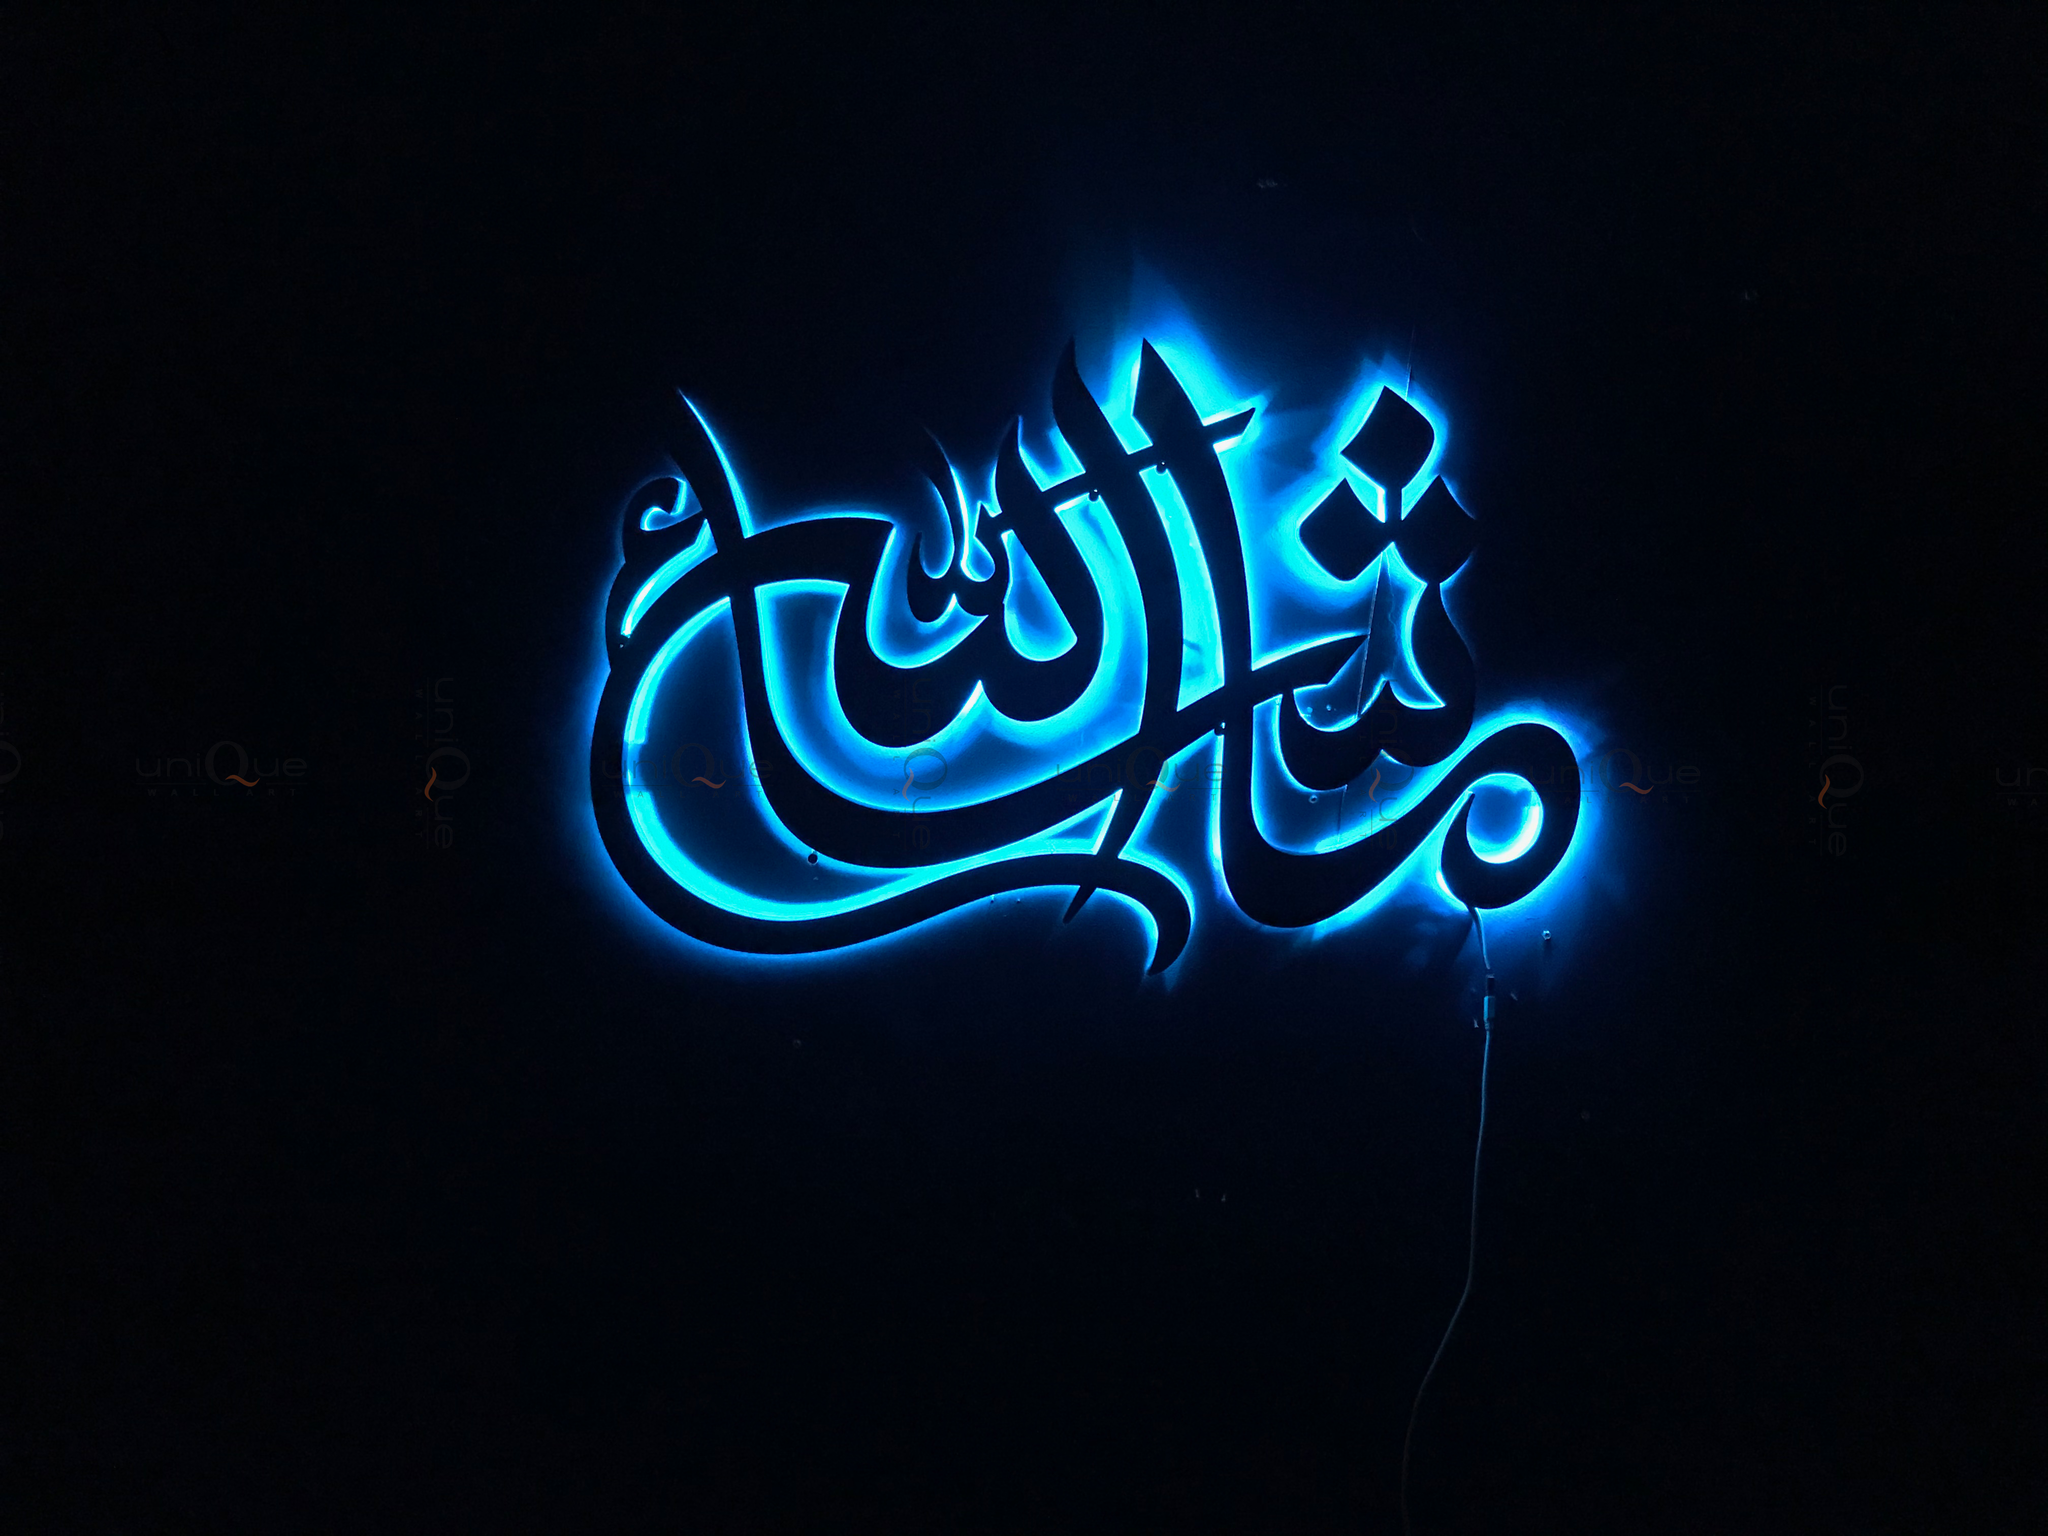 MashaAllah Islamic 3D Stainless Steel Calligraphy LED Wall Art